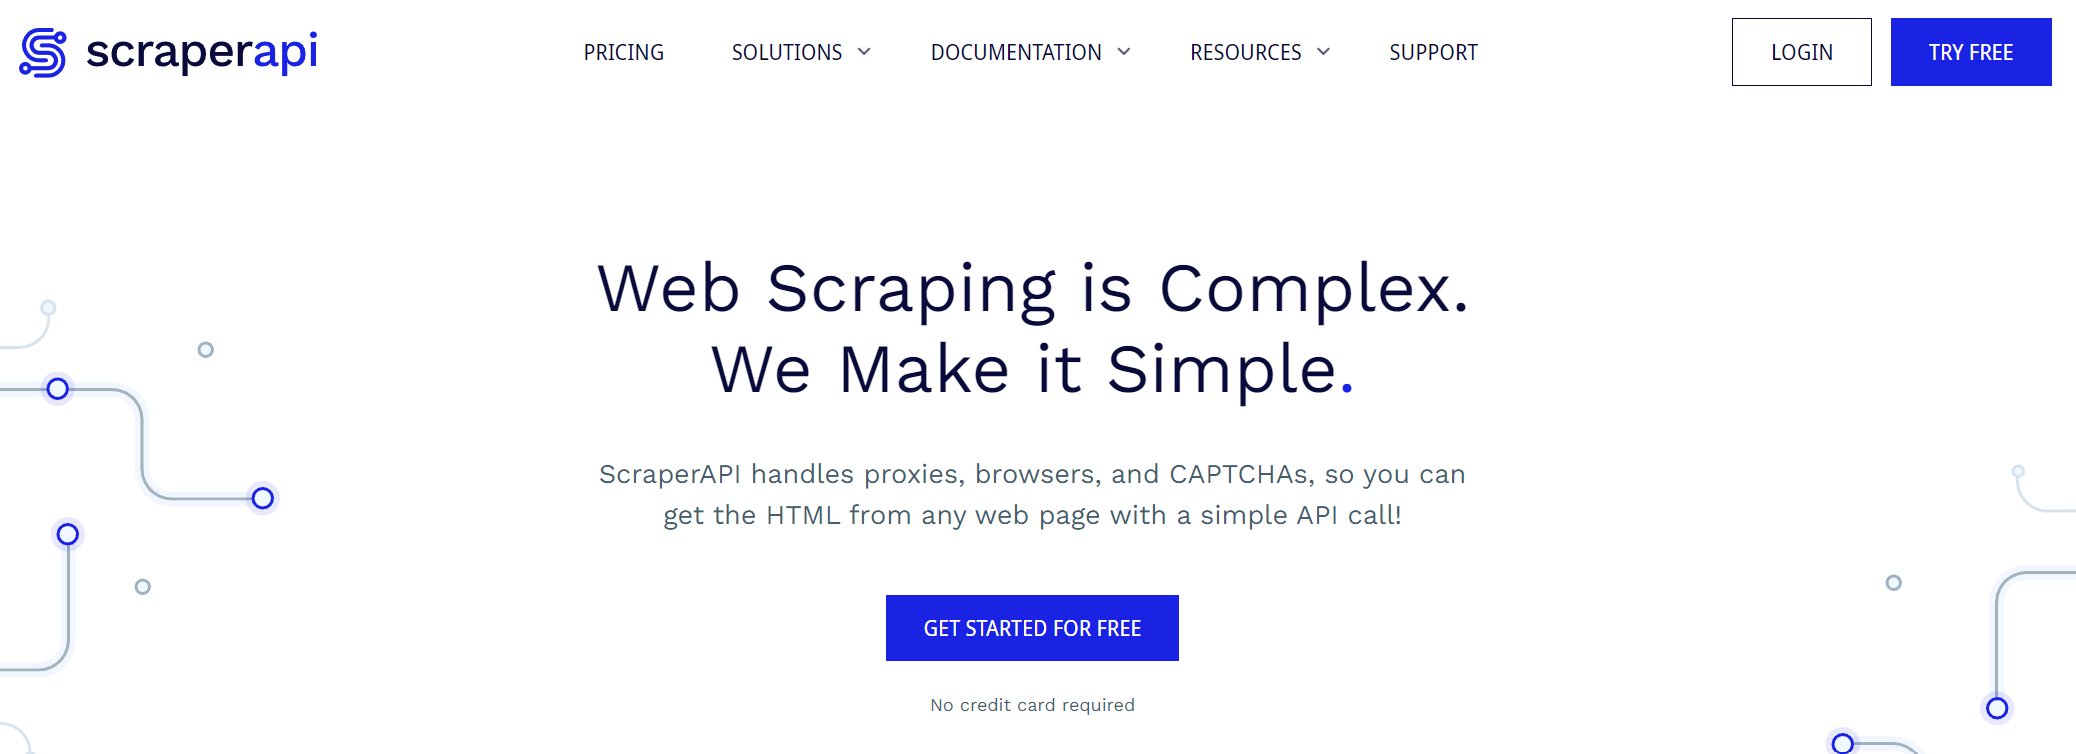 home page of the scraperapi